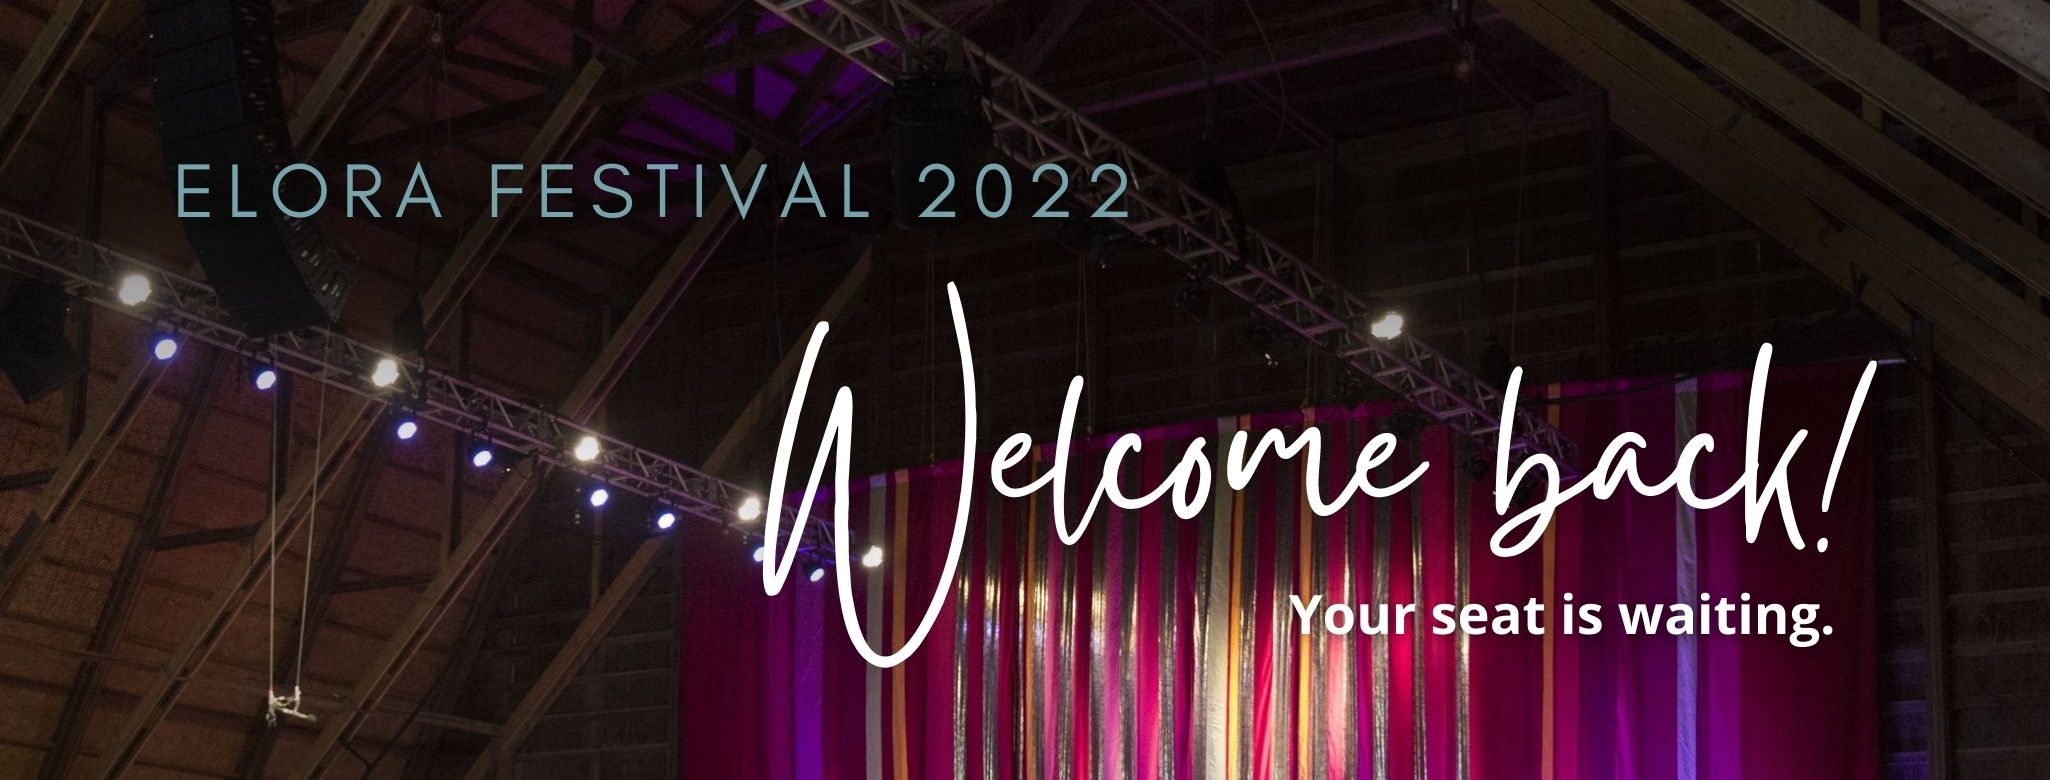 TES at the Elora Festival 2022 header